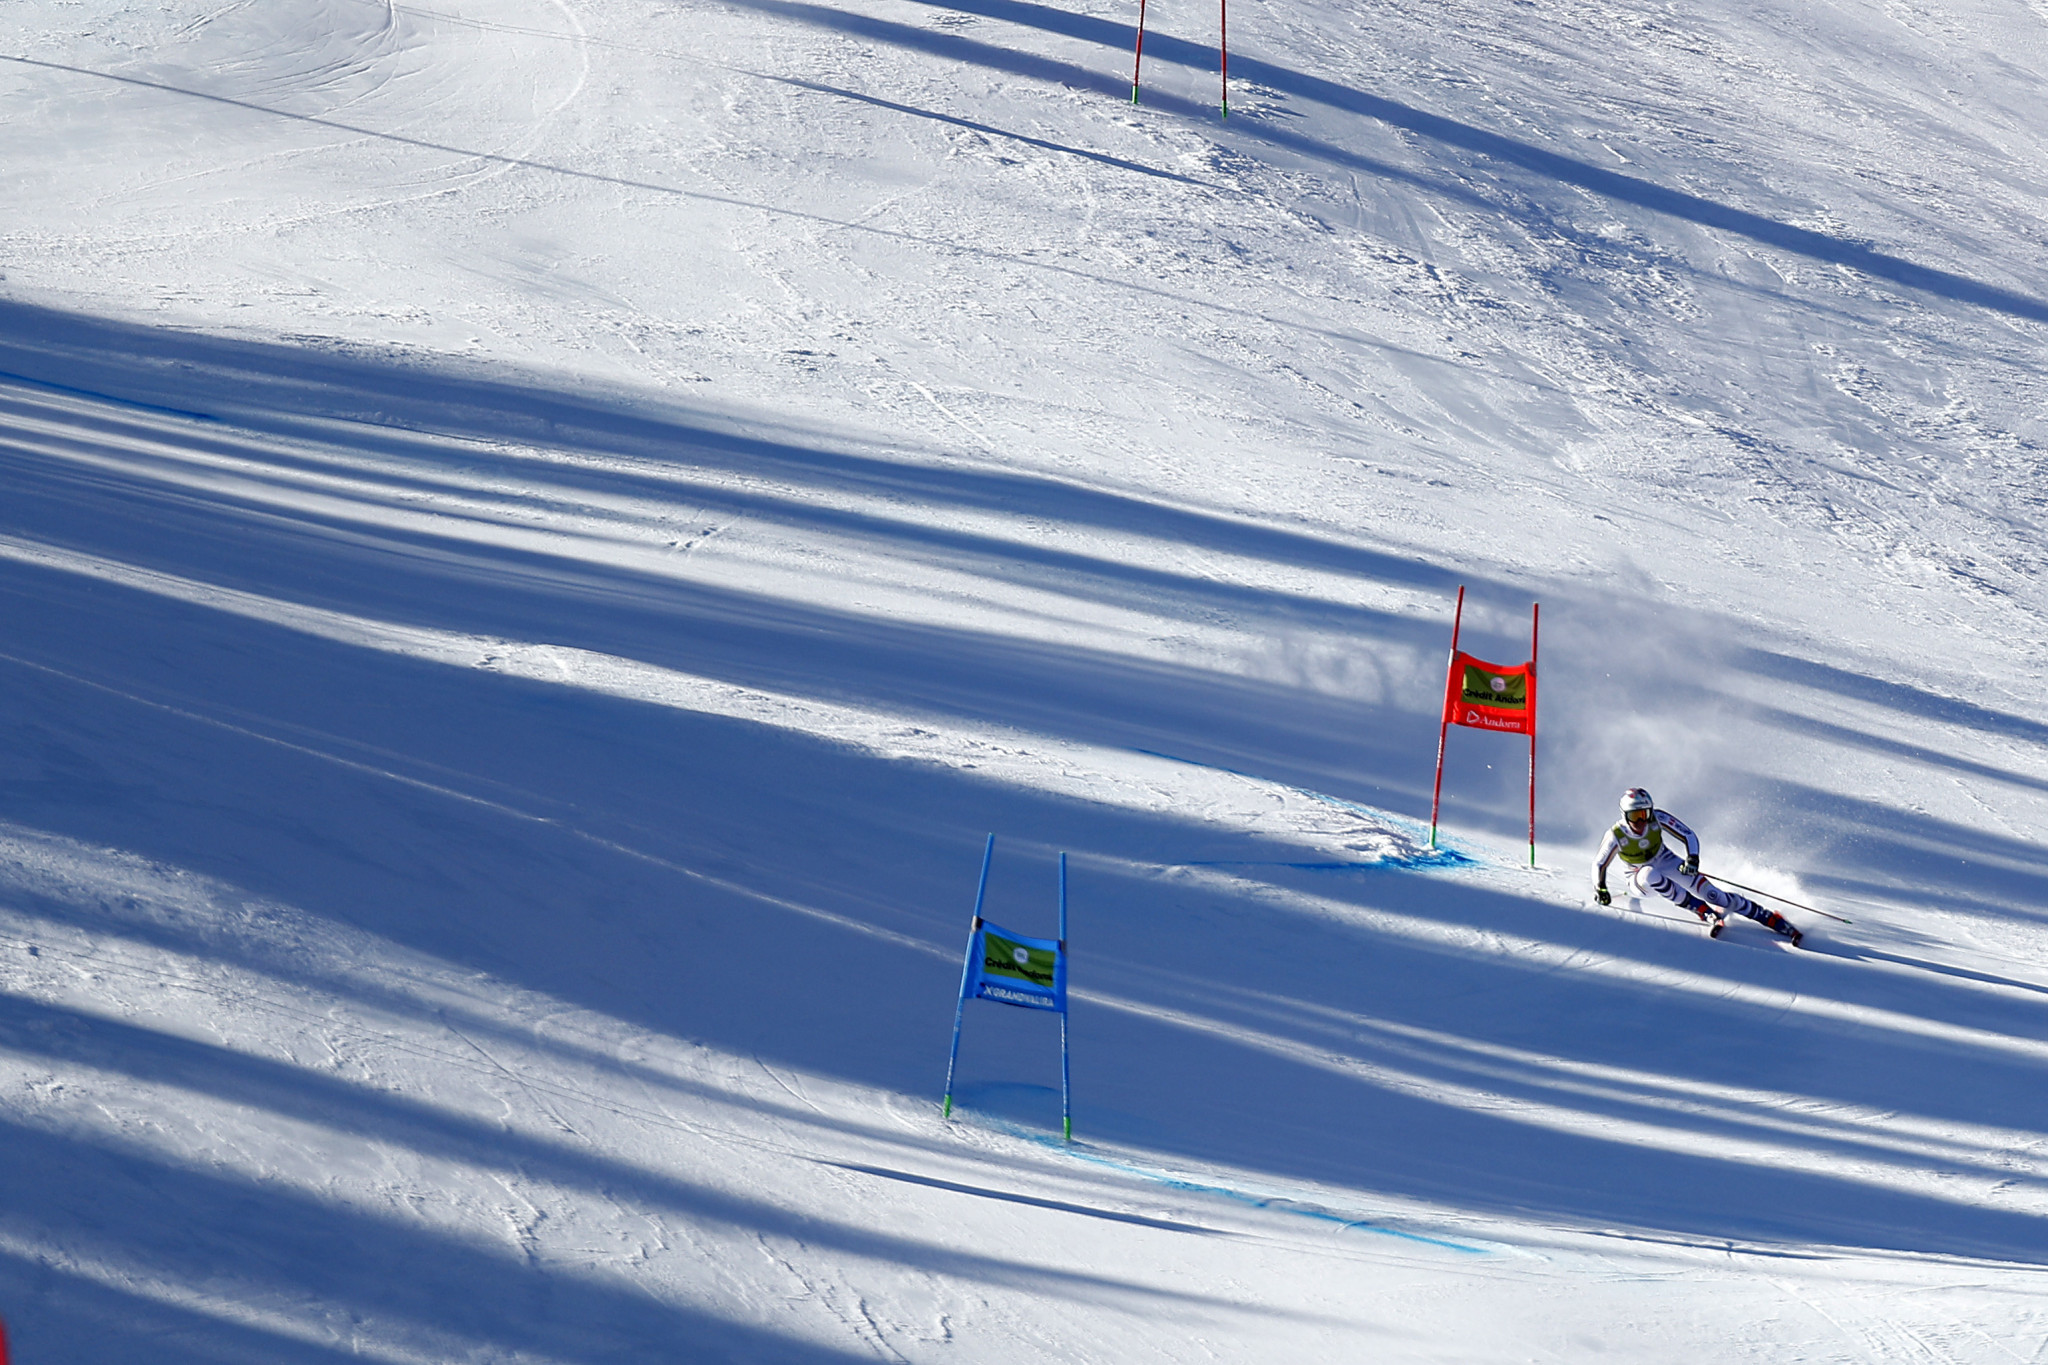 Andorra 2027 publishes sustainability plan in FIS Alpine World Ski Championships bid